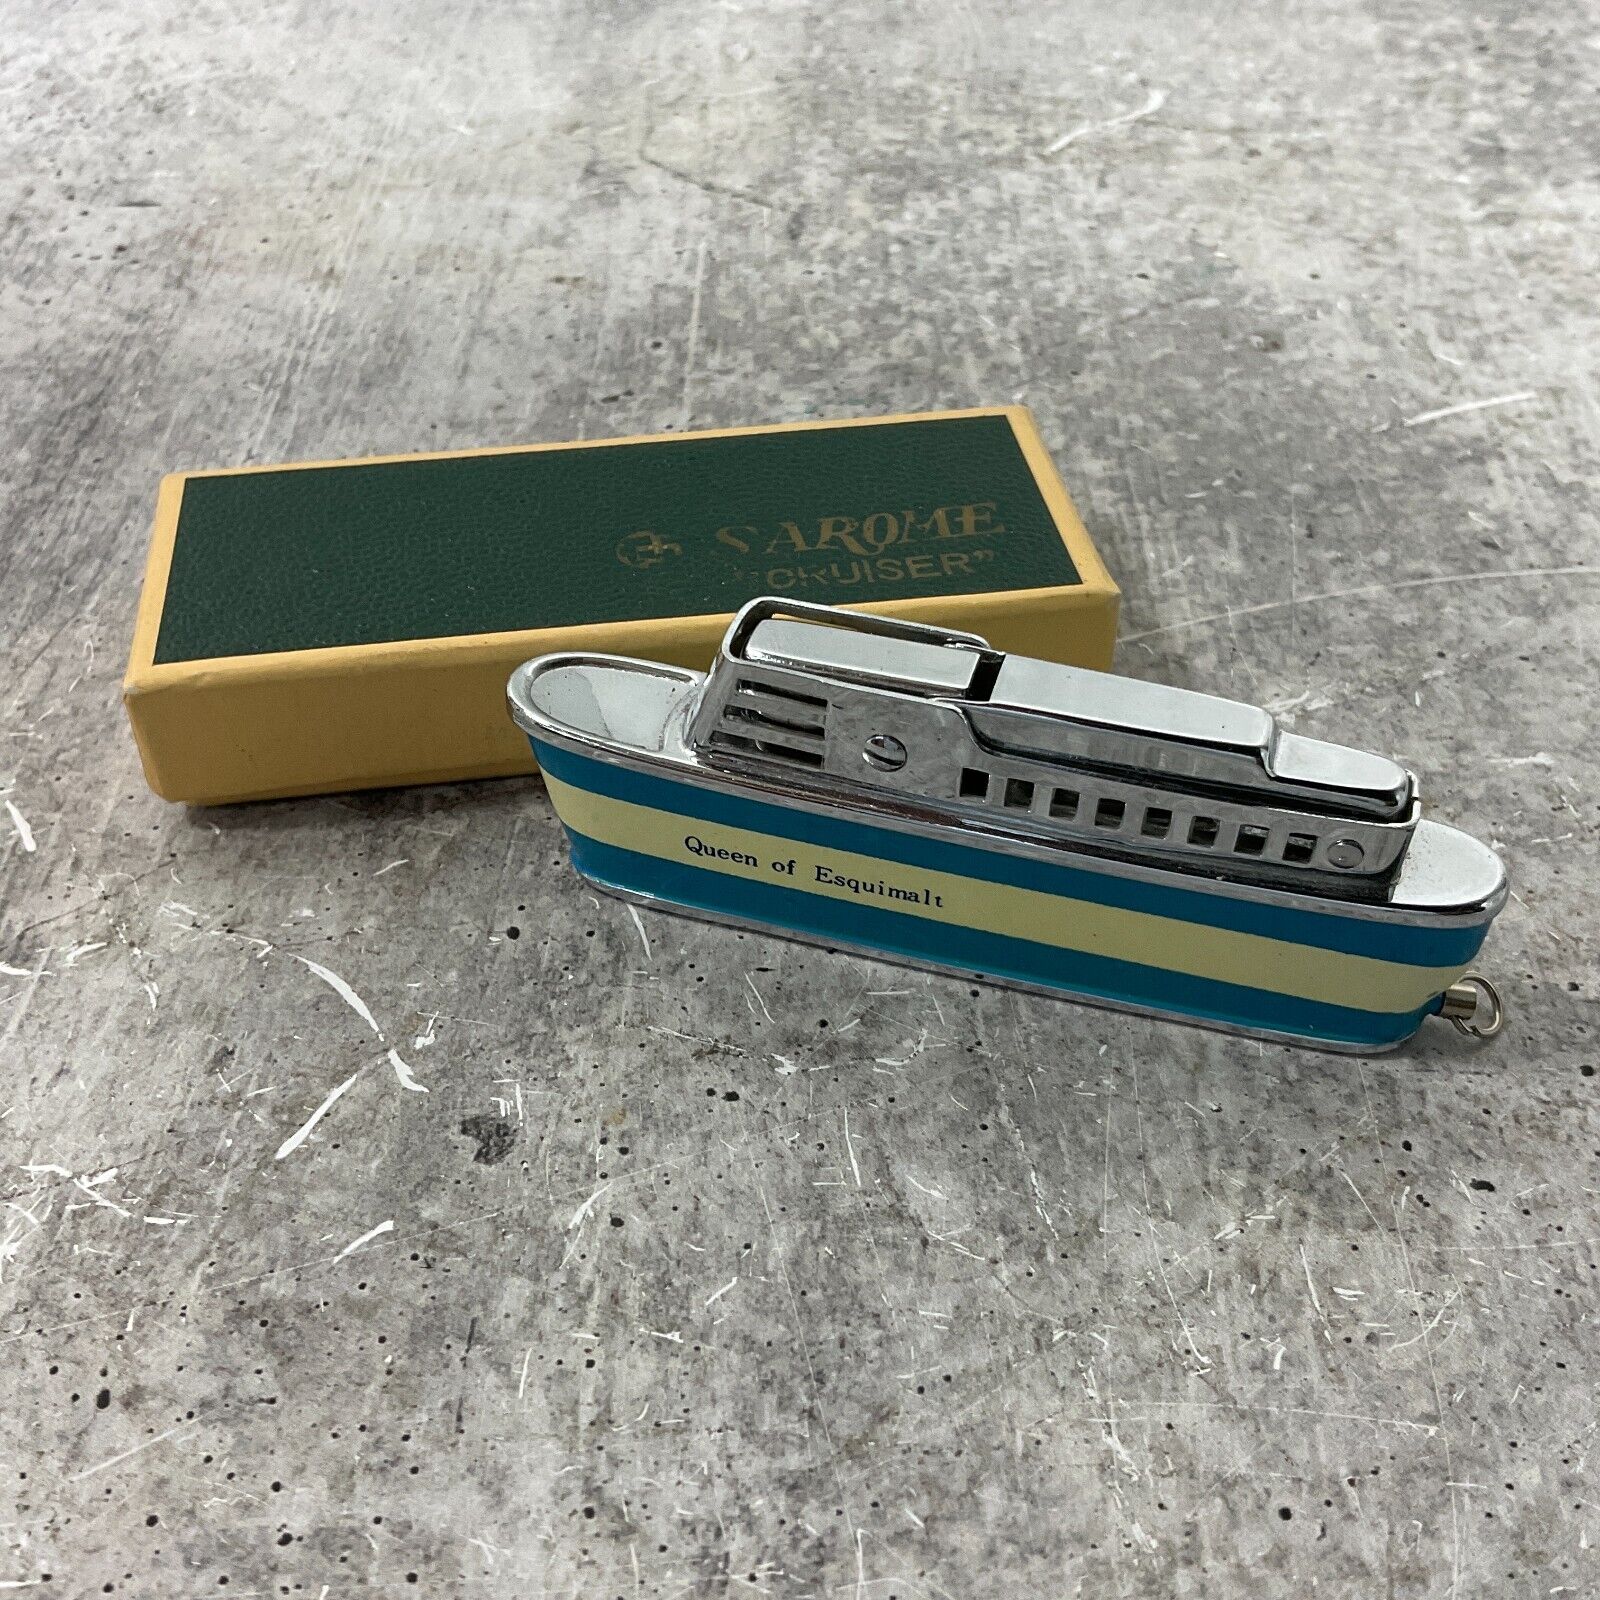 Vintage Sarome Cruiser Lighter Queen of Esquimalt Canadian Ferry Japan + Box